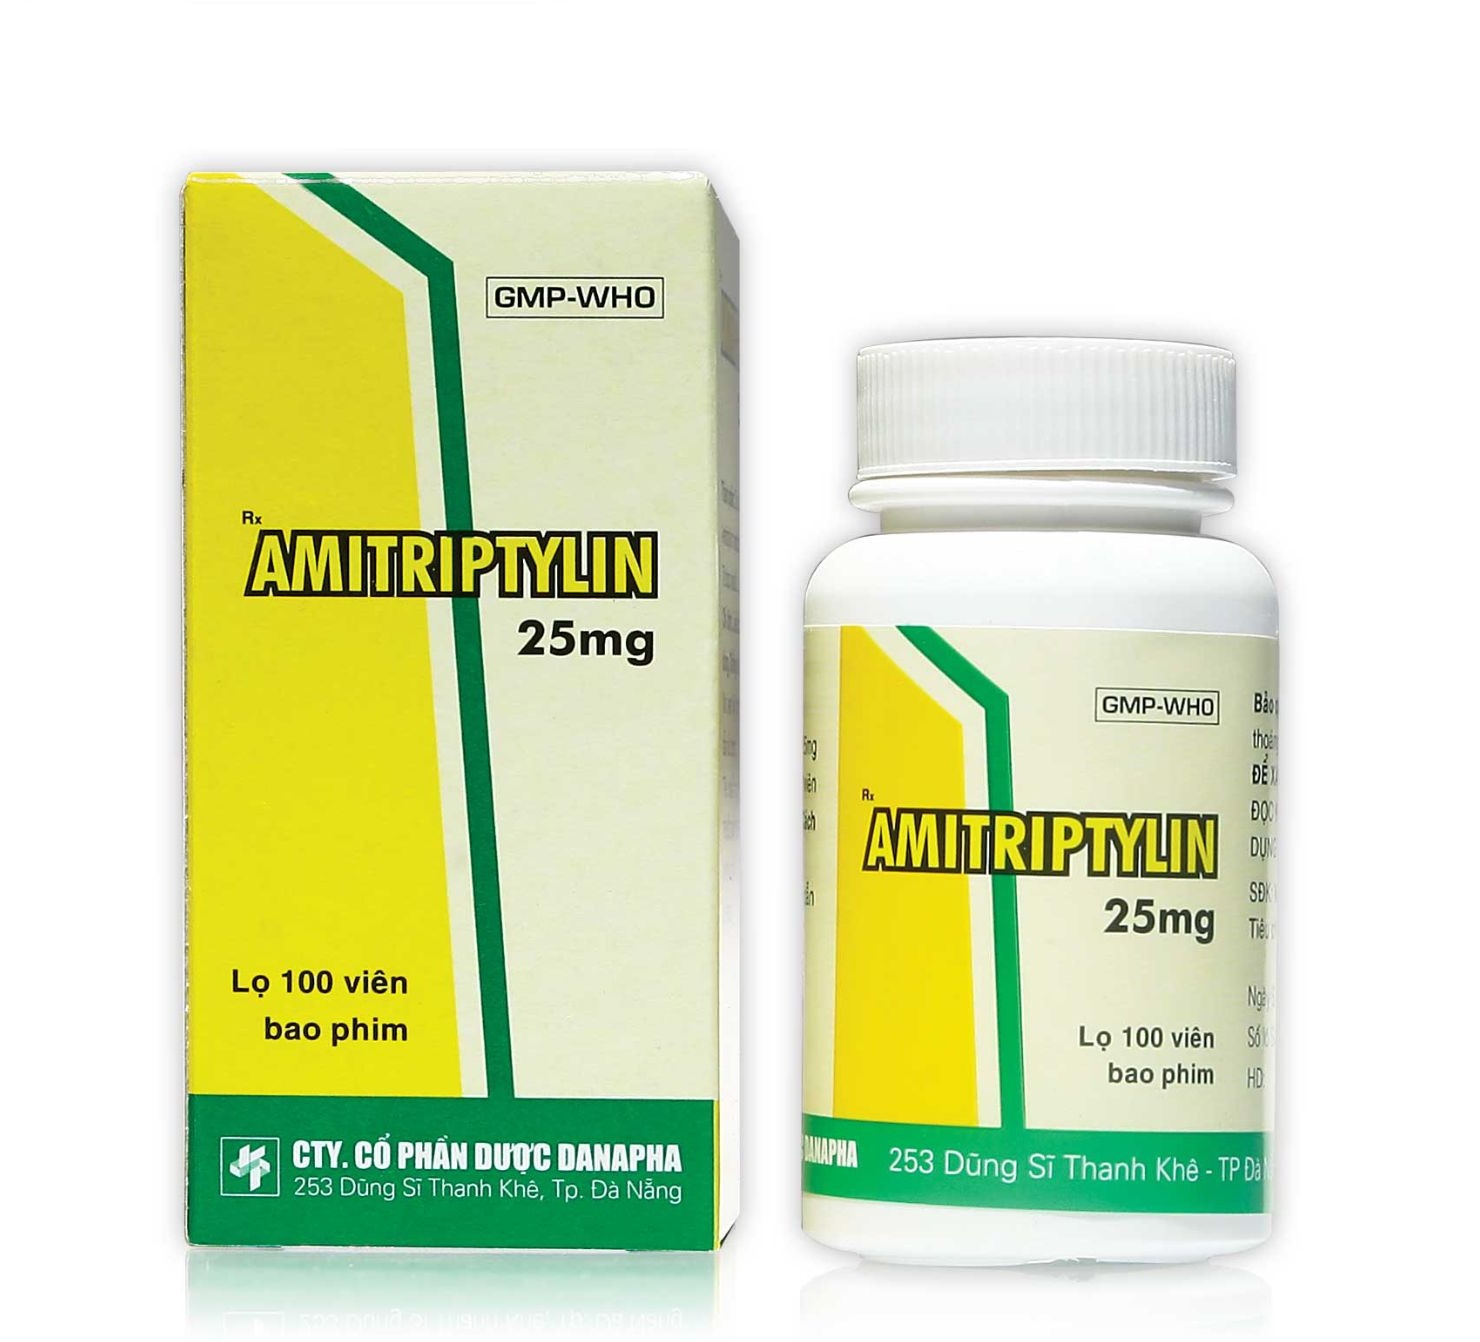 Amitriptylin 25 mg (Antidepressiva)